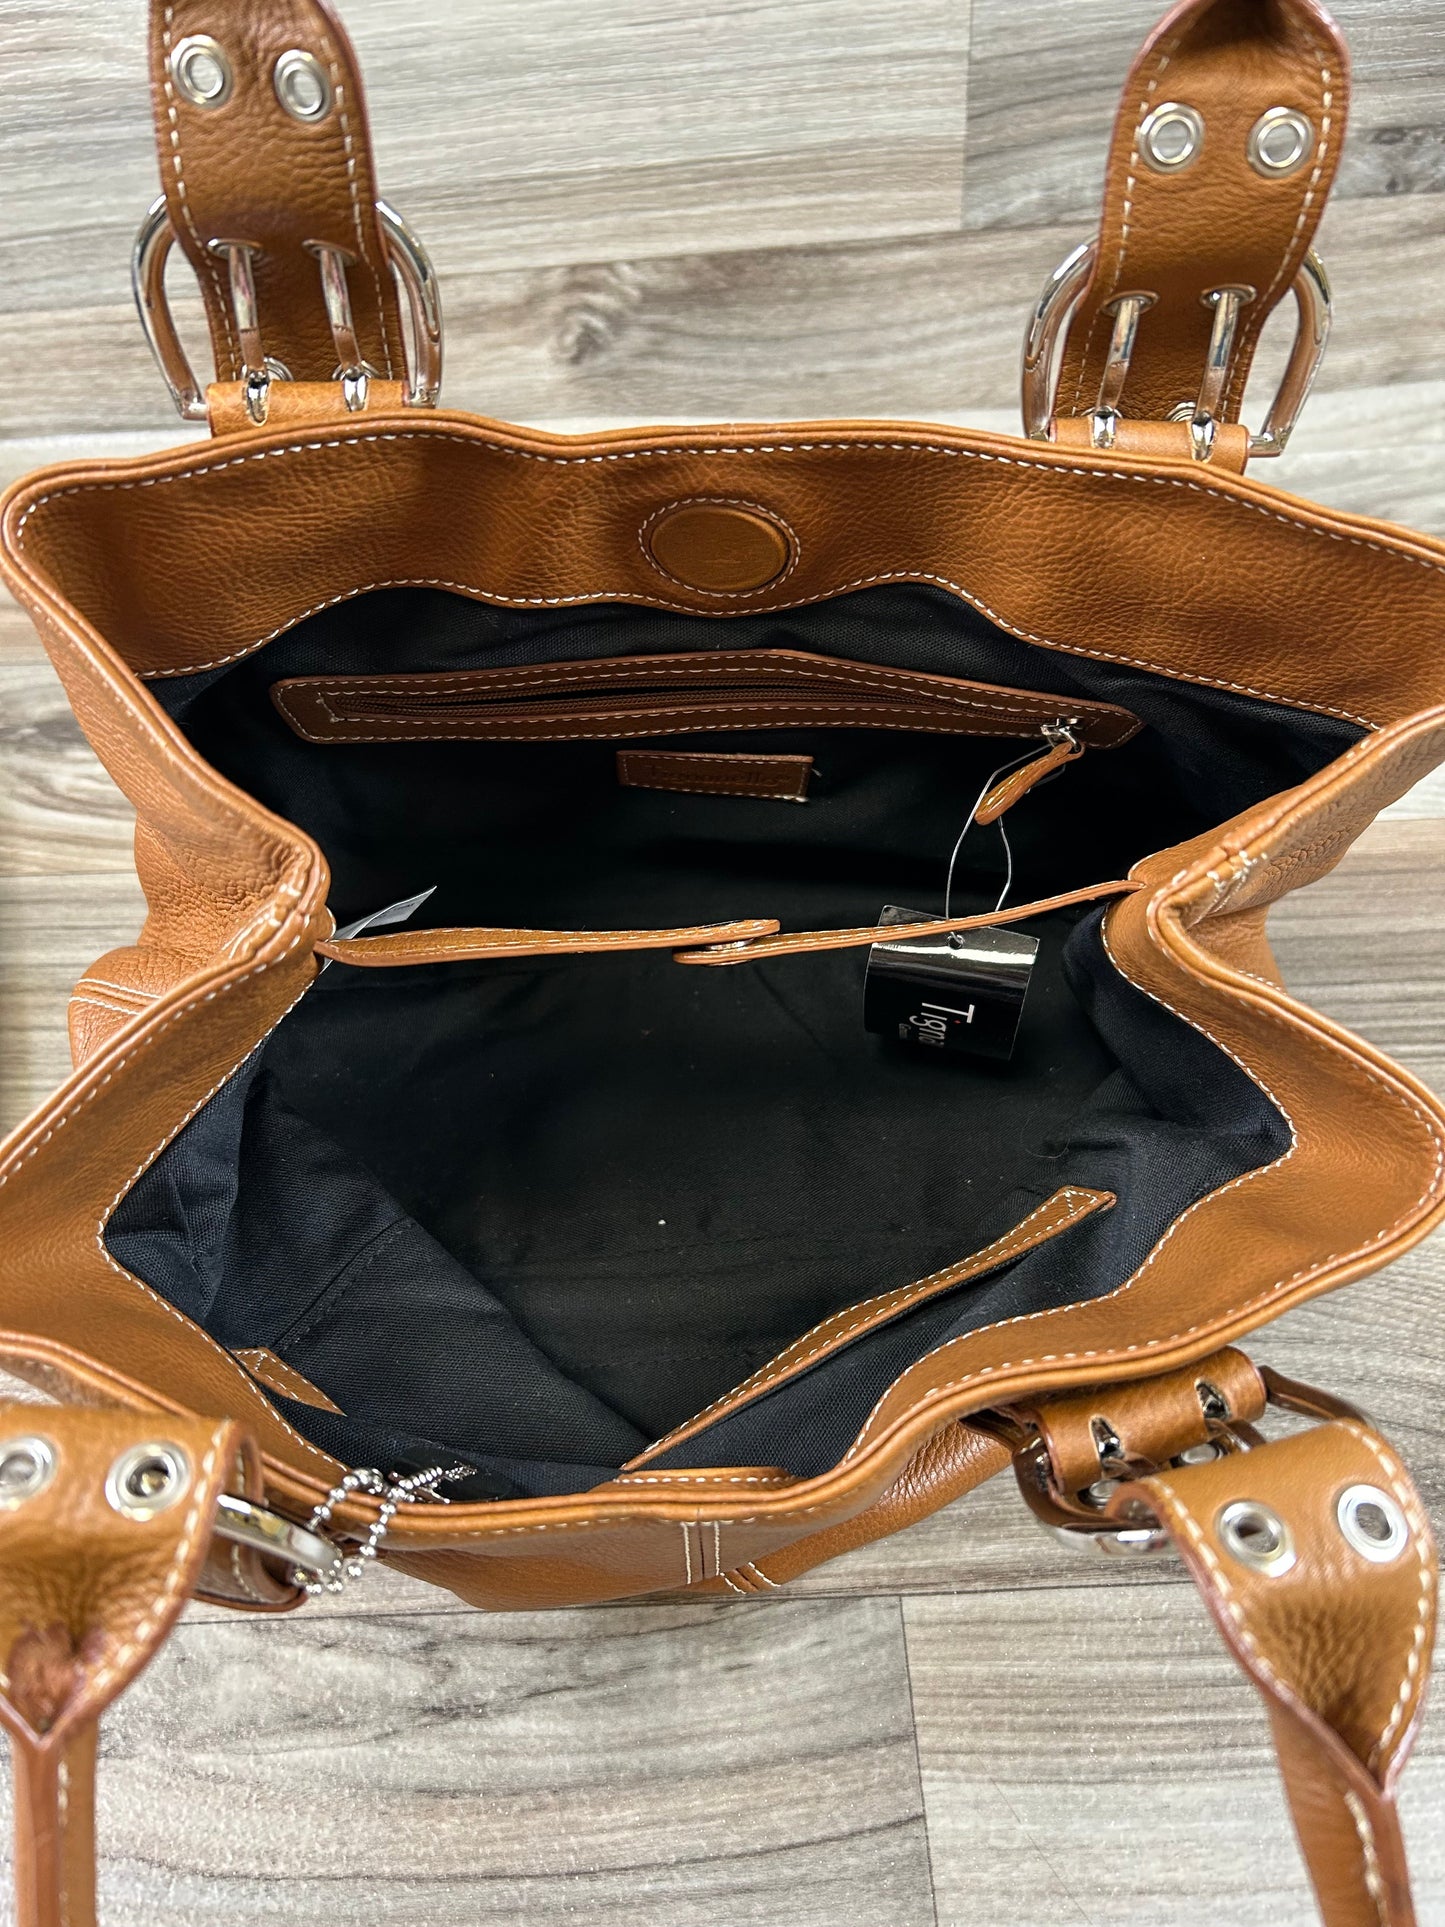 Handbag Tignanello  Purses, Size Medium